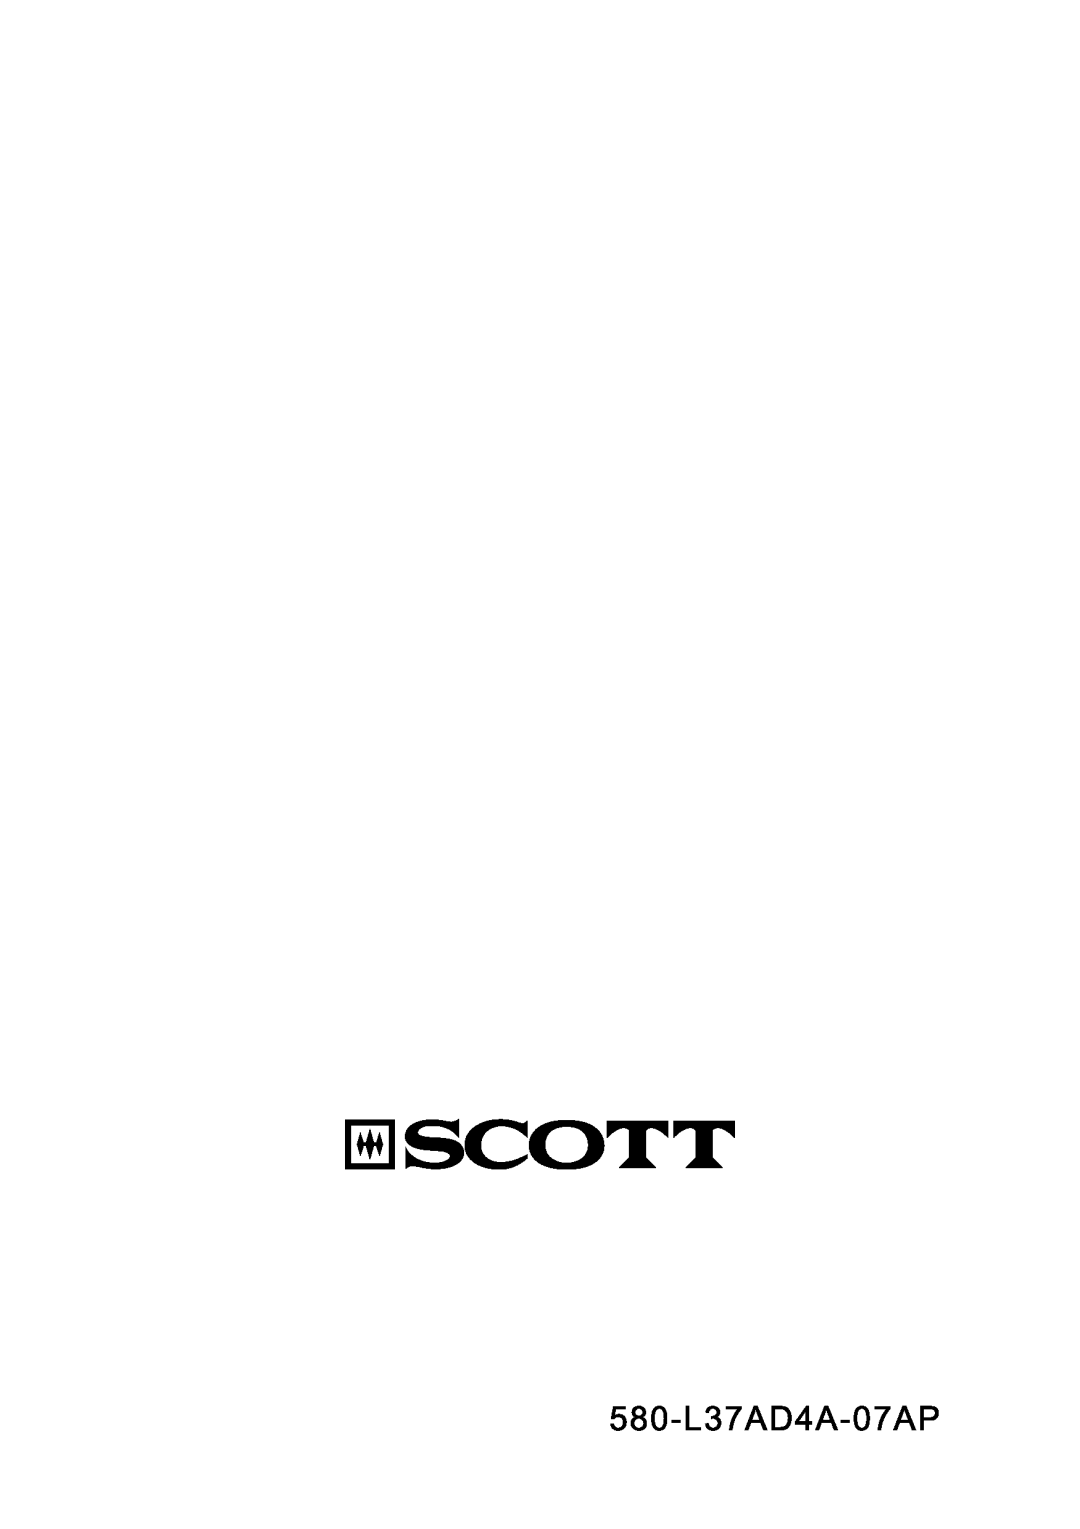 Scott LCT37SHA manual 